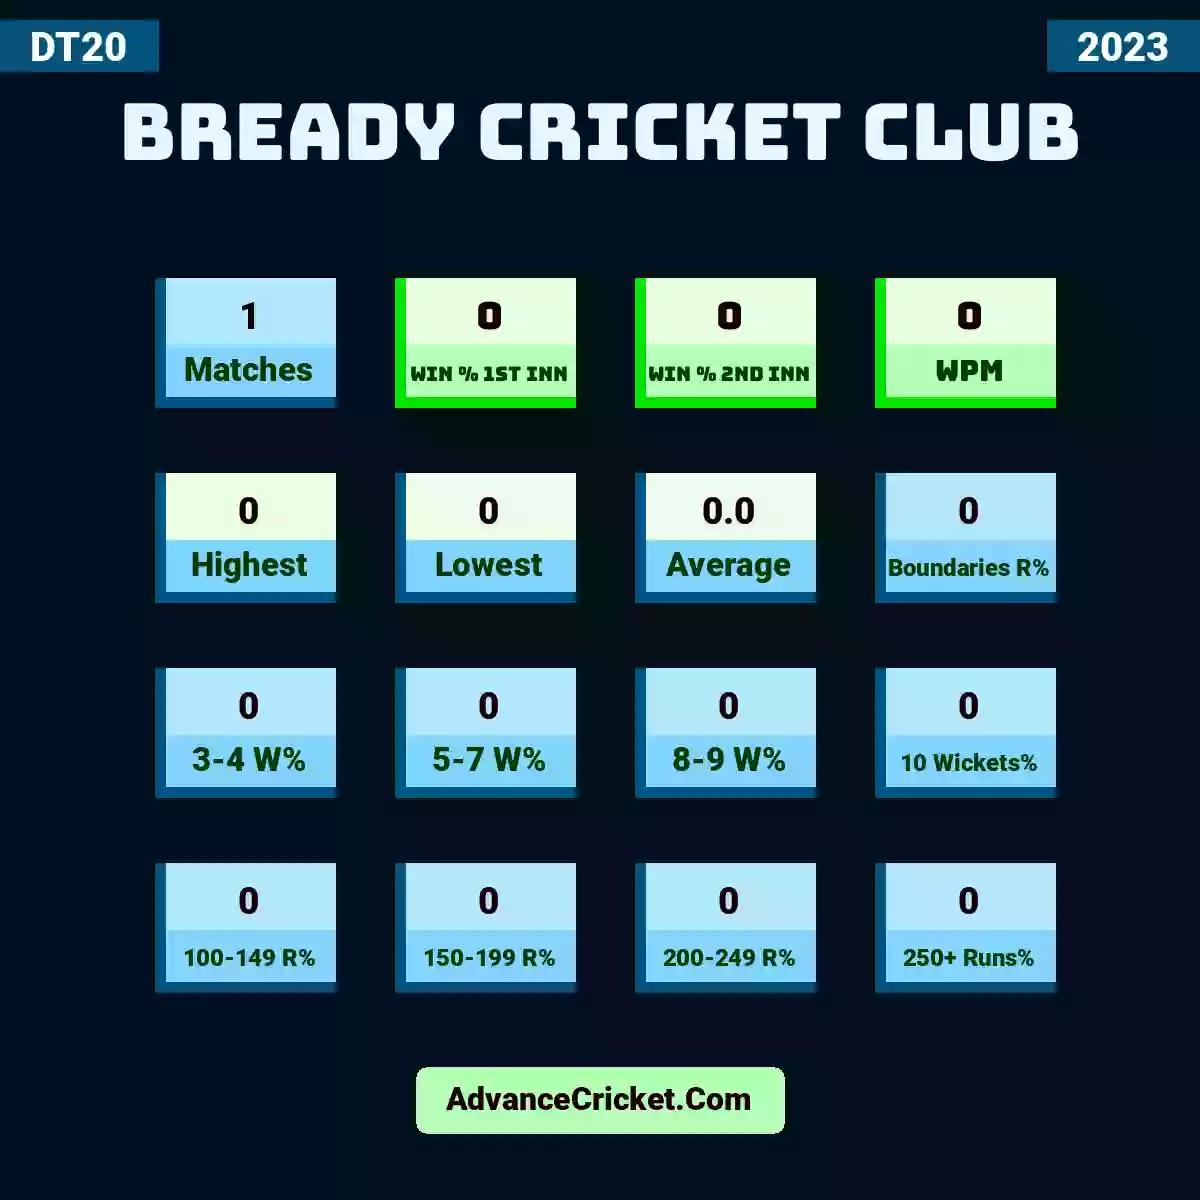 Image showing Bready Cricket Club with Matches: 1, Win % 1st Inn: 0, Win % 2nd Inn: 0, WPM: 0, Highest: 0, Lowest: 0, Average: 0.0, Boundaries R%: 0, 3-4 W%: 0, 5-7 W%: 0, 8-9 W%: 0, 10 Wickets%: 0, 100-149 R%: 0, 150-199 R%: 0, 200-249 R%: 0, 250+ Runs%: 0.